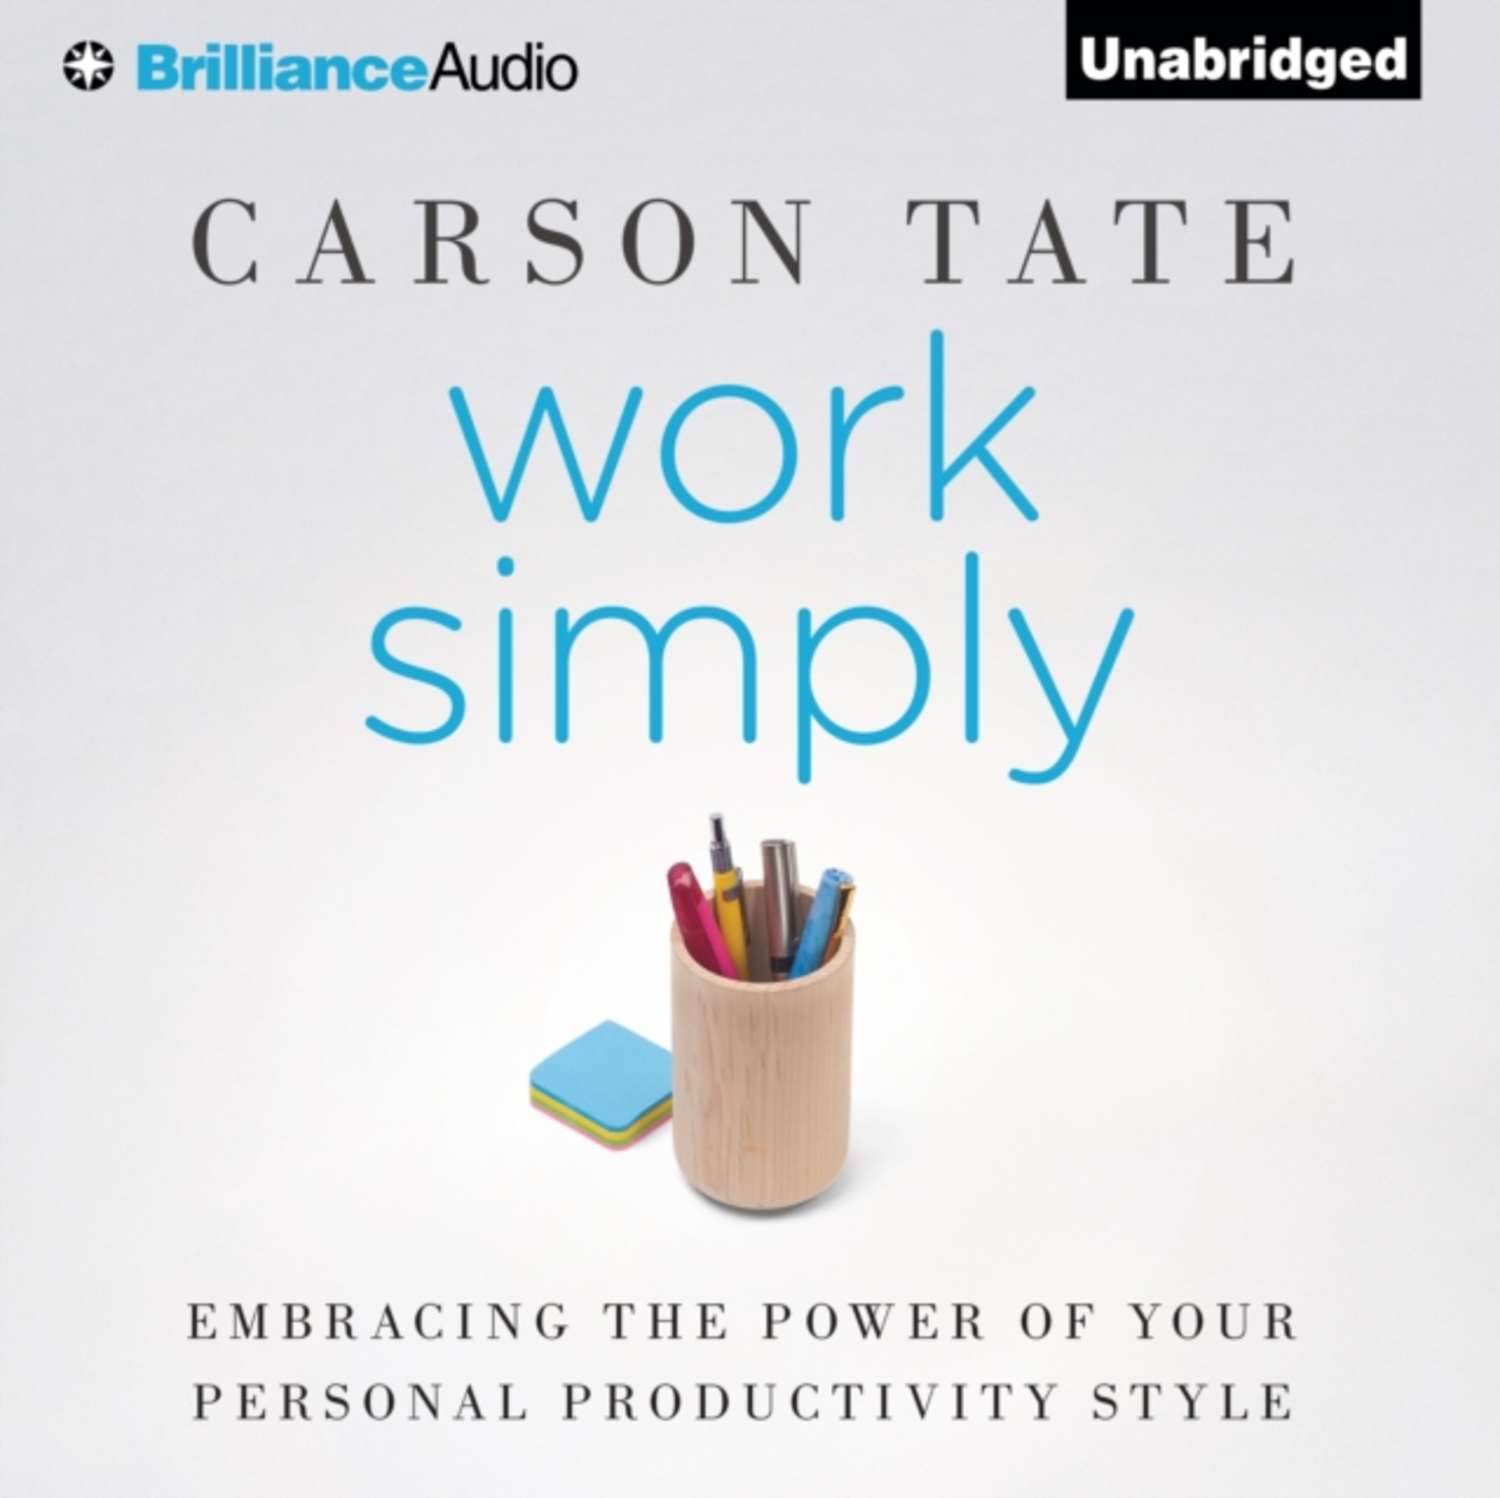 Simply works. Карсон Тейт. Работай легко Карсон Тейт. Carson Tate personal Productivity.... Simple work.